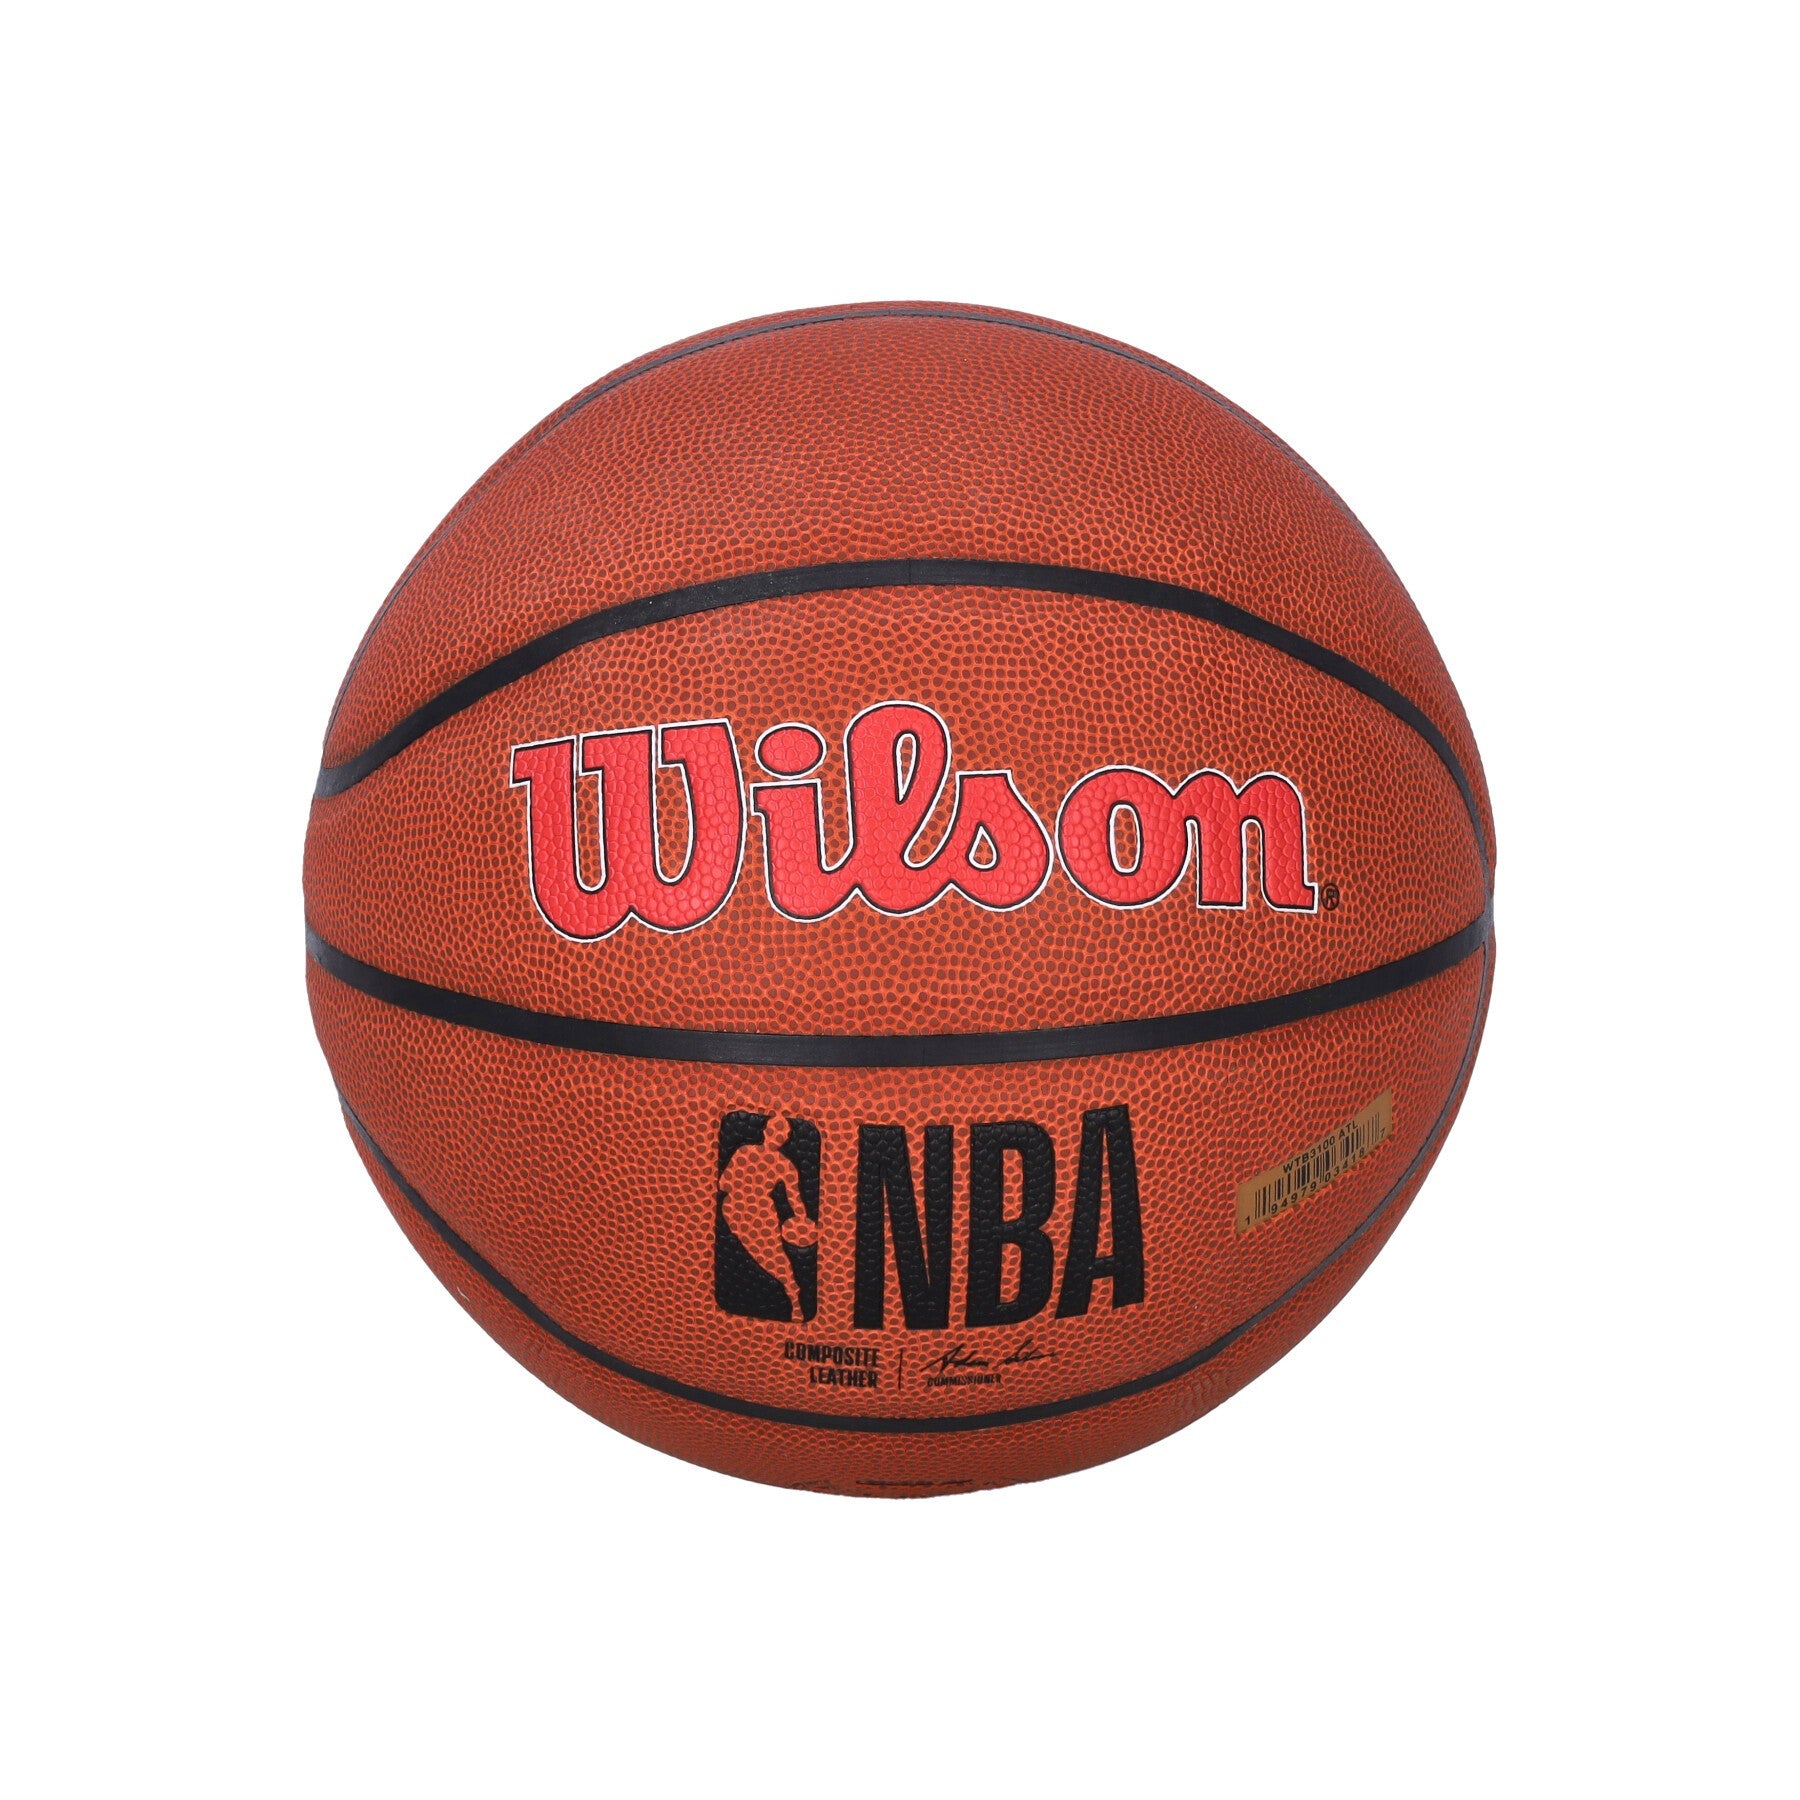 Pallone Uomo Nba Team Alliance Basketball Size 7 Atlhaw Brown/original Team Colors WTB3100XBATL